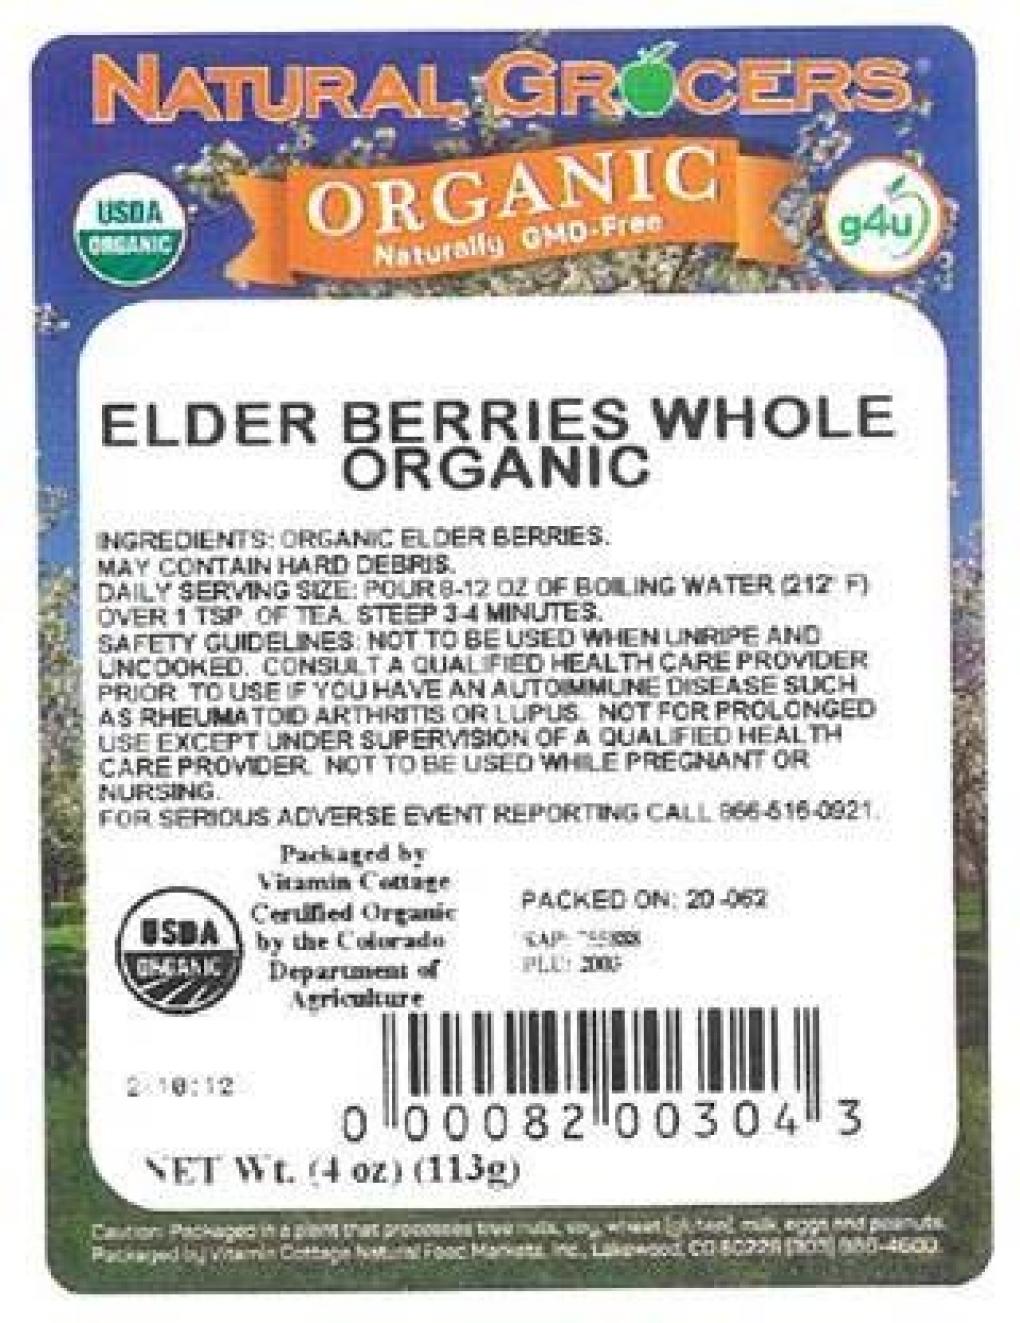 Natural Grocers Organic Elderberries Recalled for Salmonella Risk